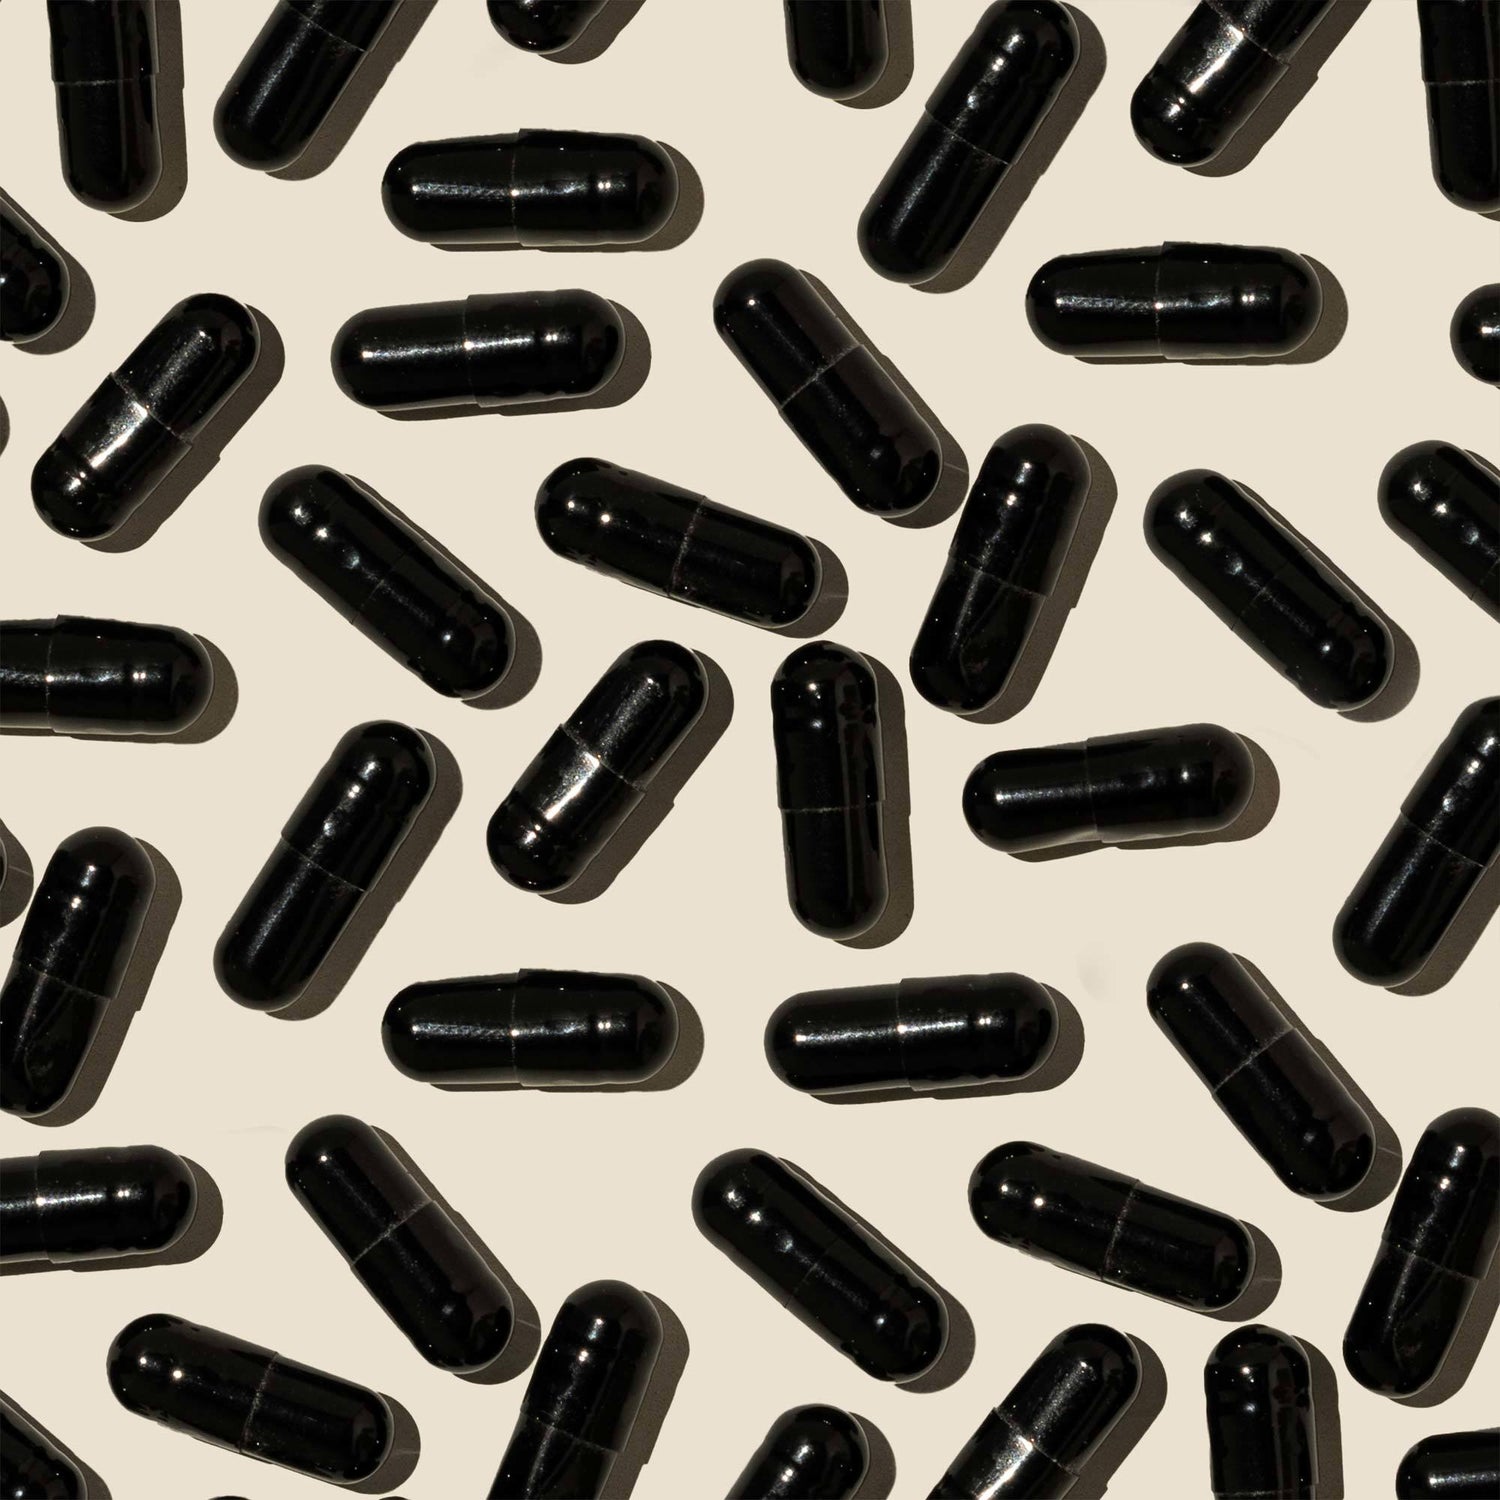 Stylised image of loose capsules